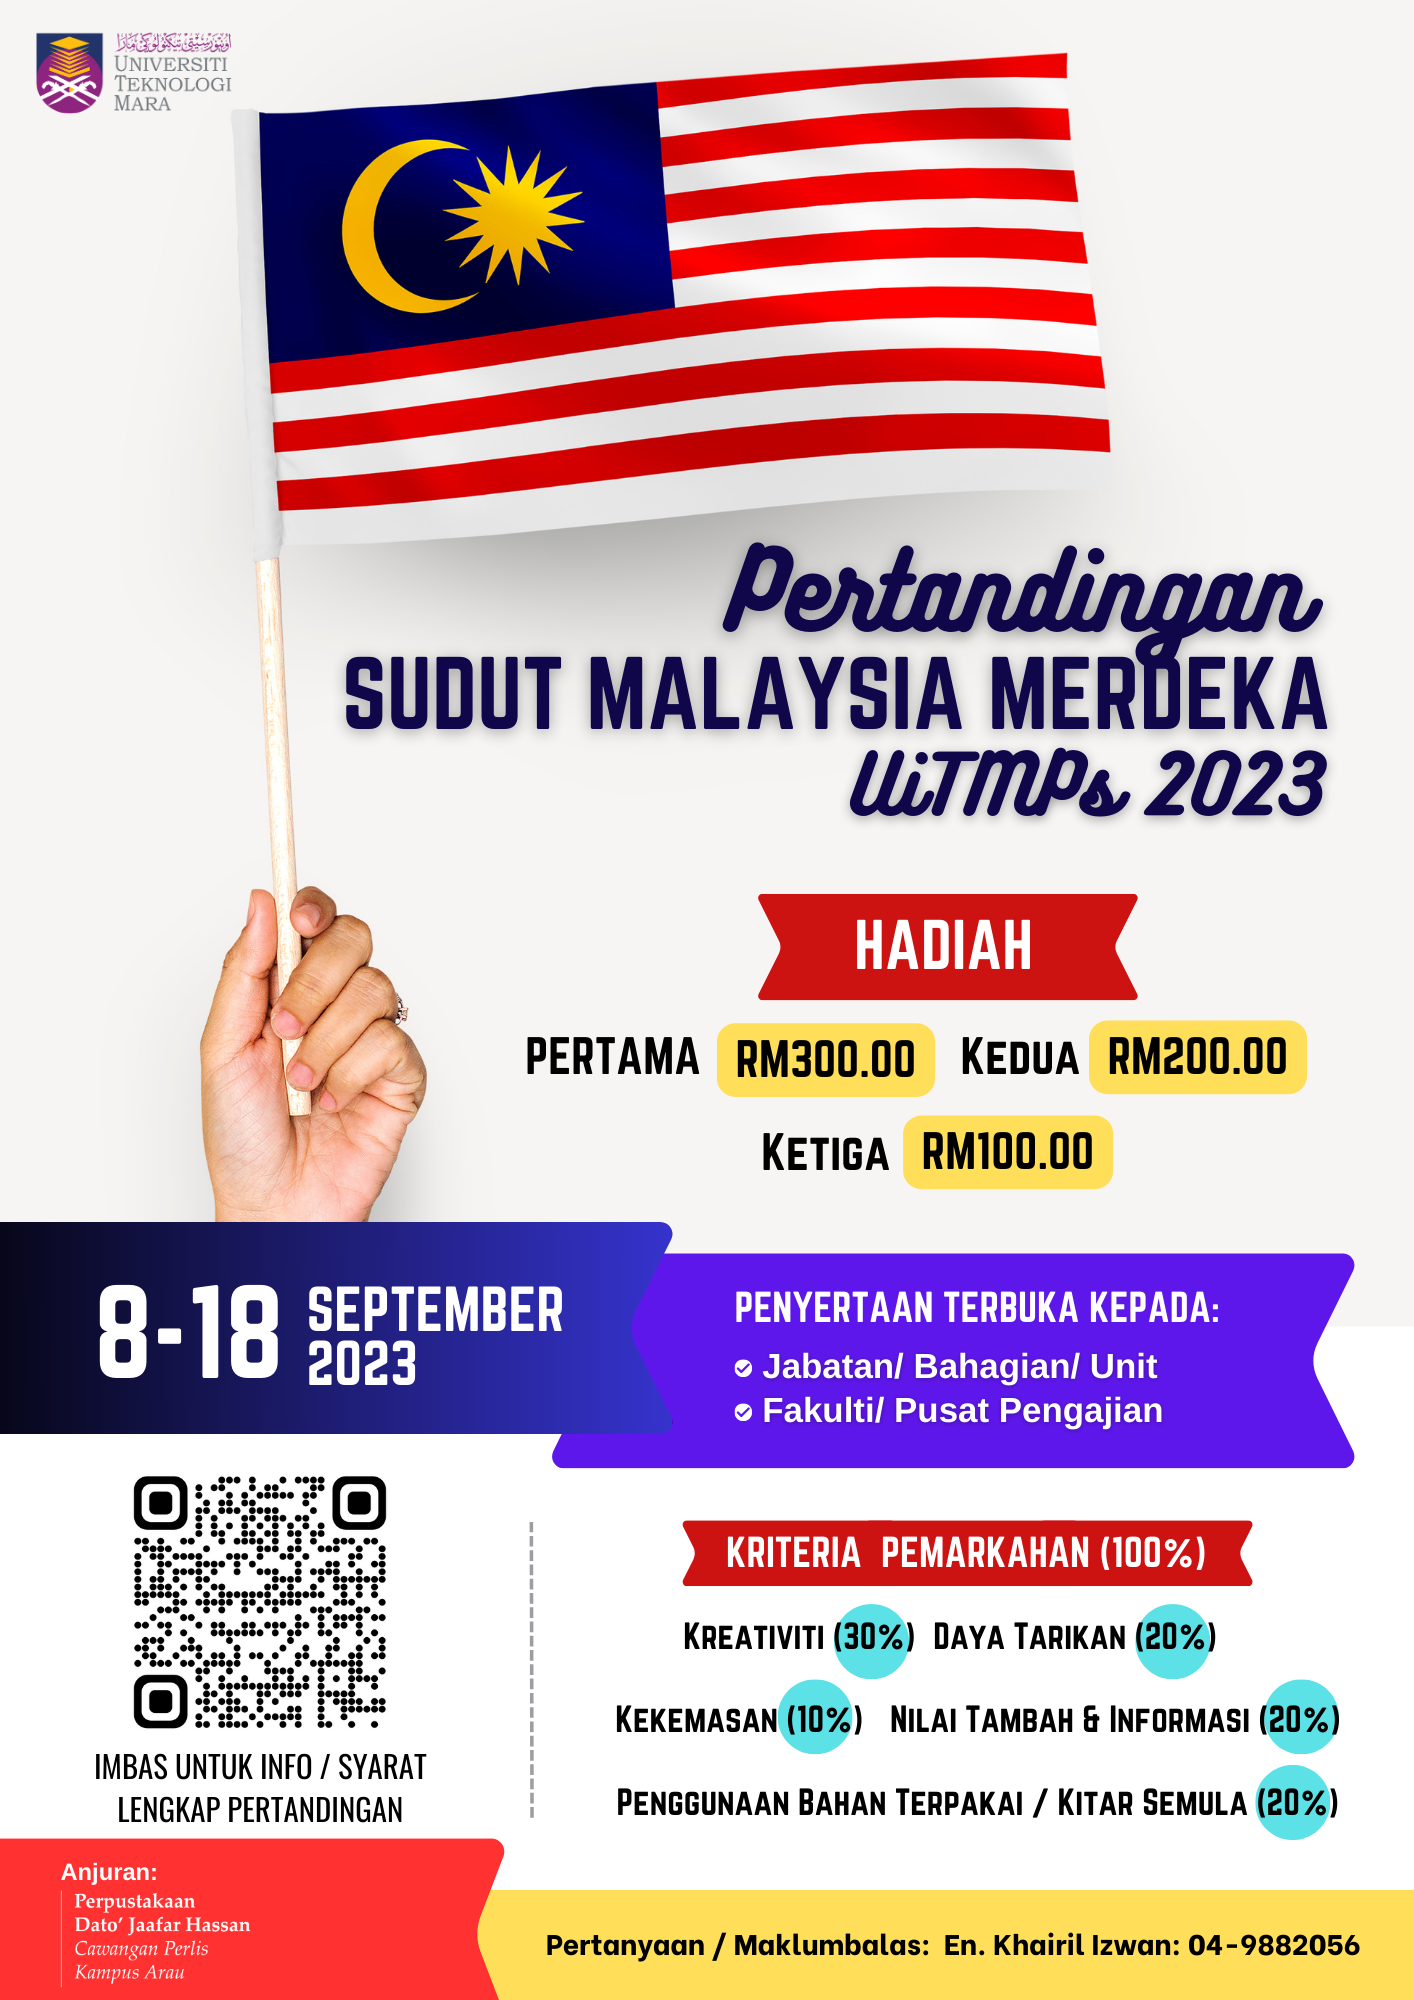 Pertandingan Sudut Malaysia Merdeka UiTMPs 2023